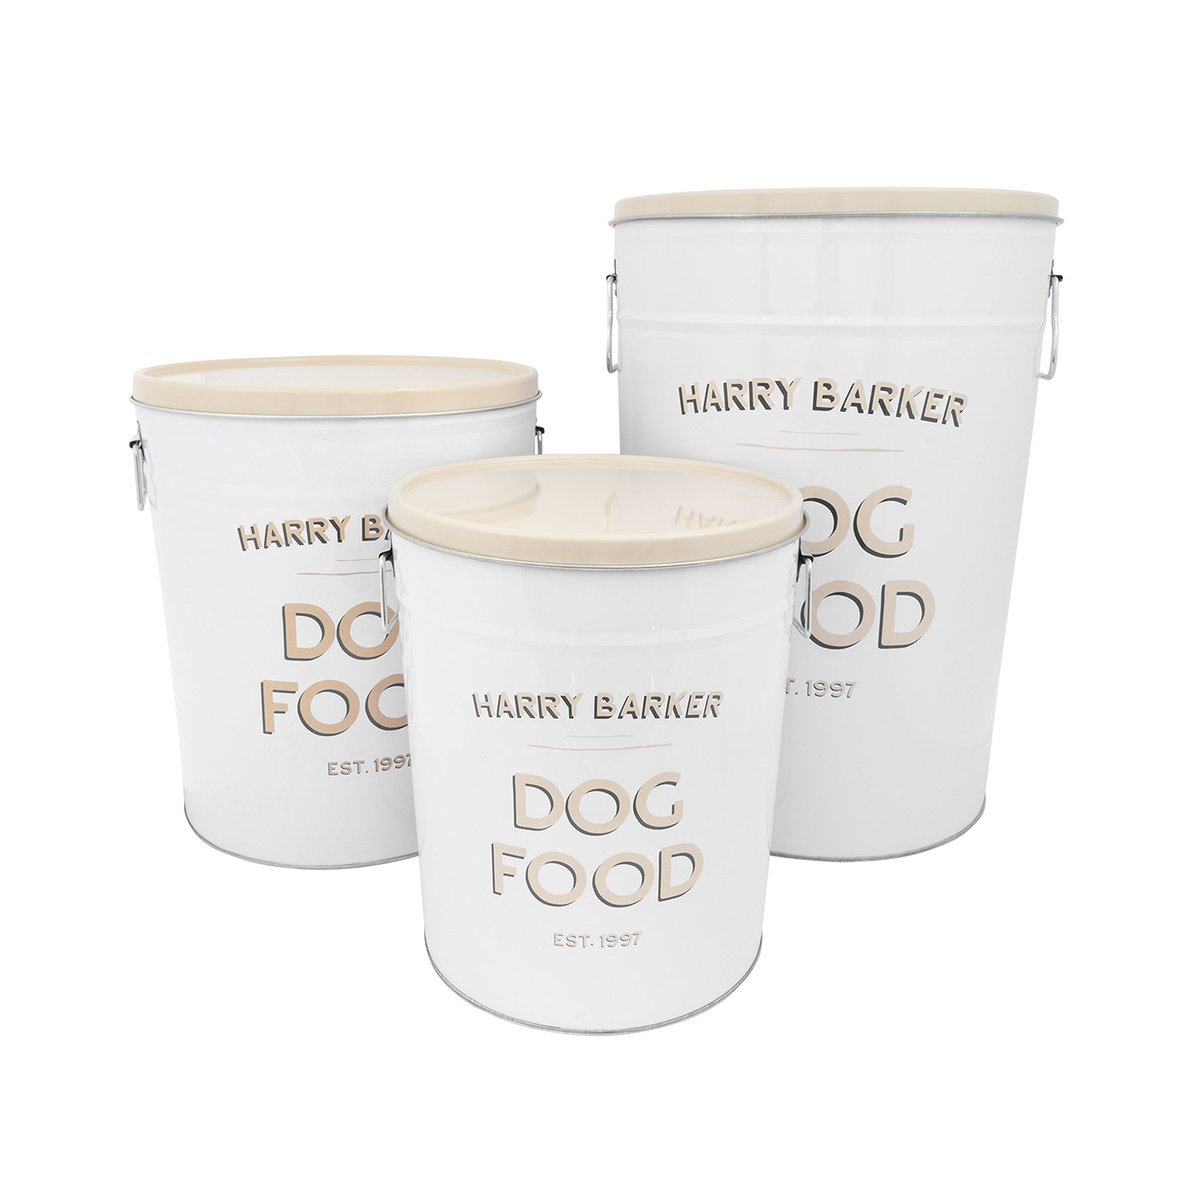 Bon Chien Dog Food Storage Canister